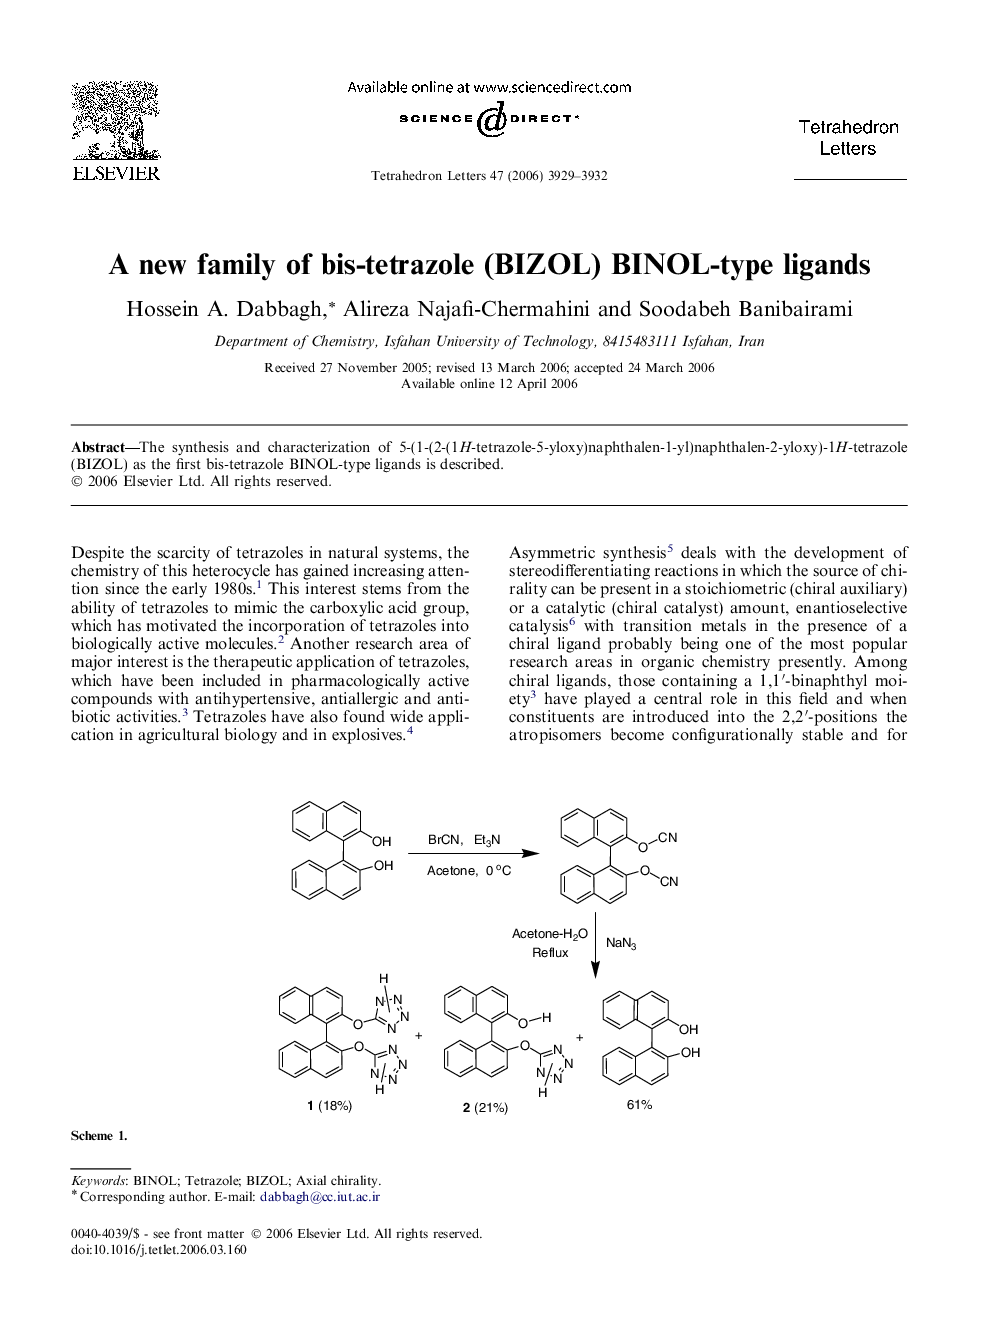 A new family of bis-tetrazole (BIZOL) BINOL-type ligands